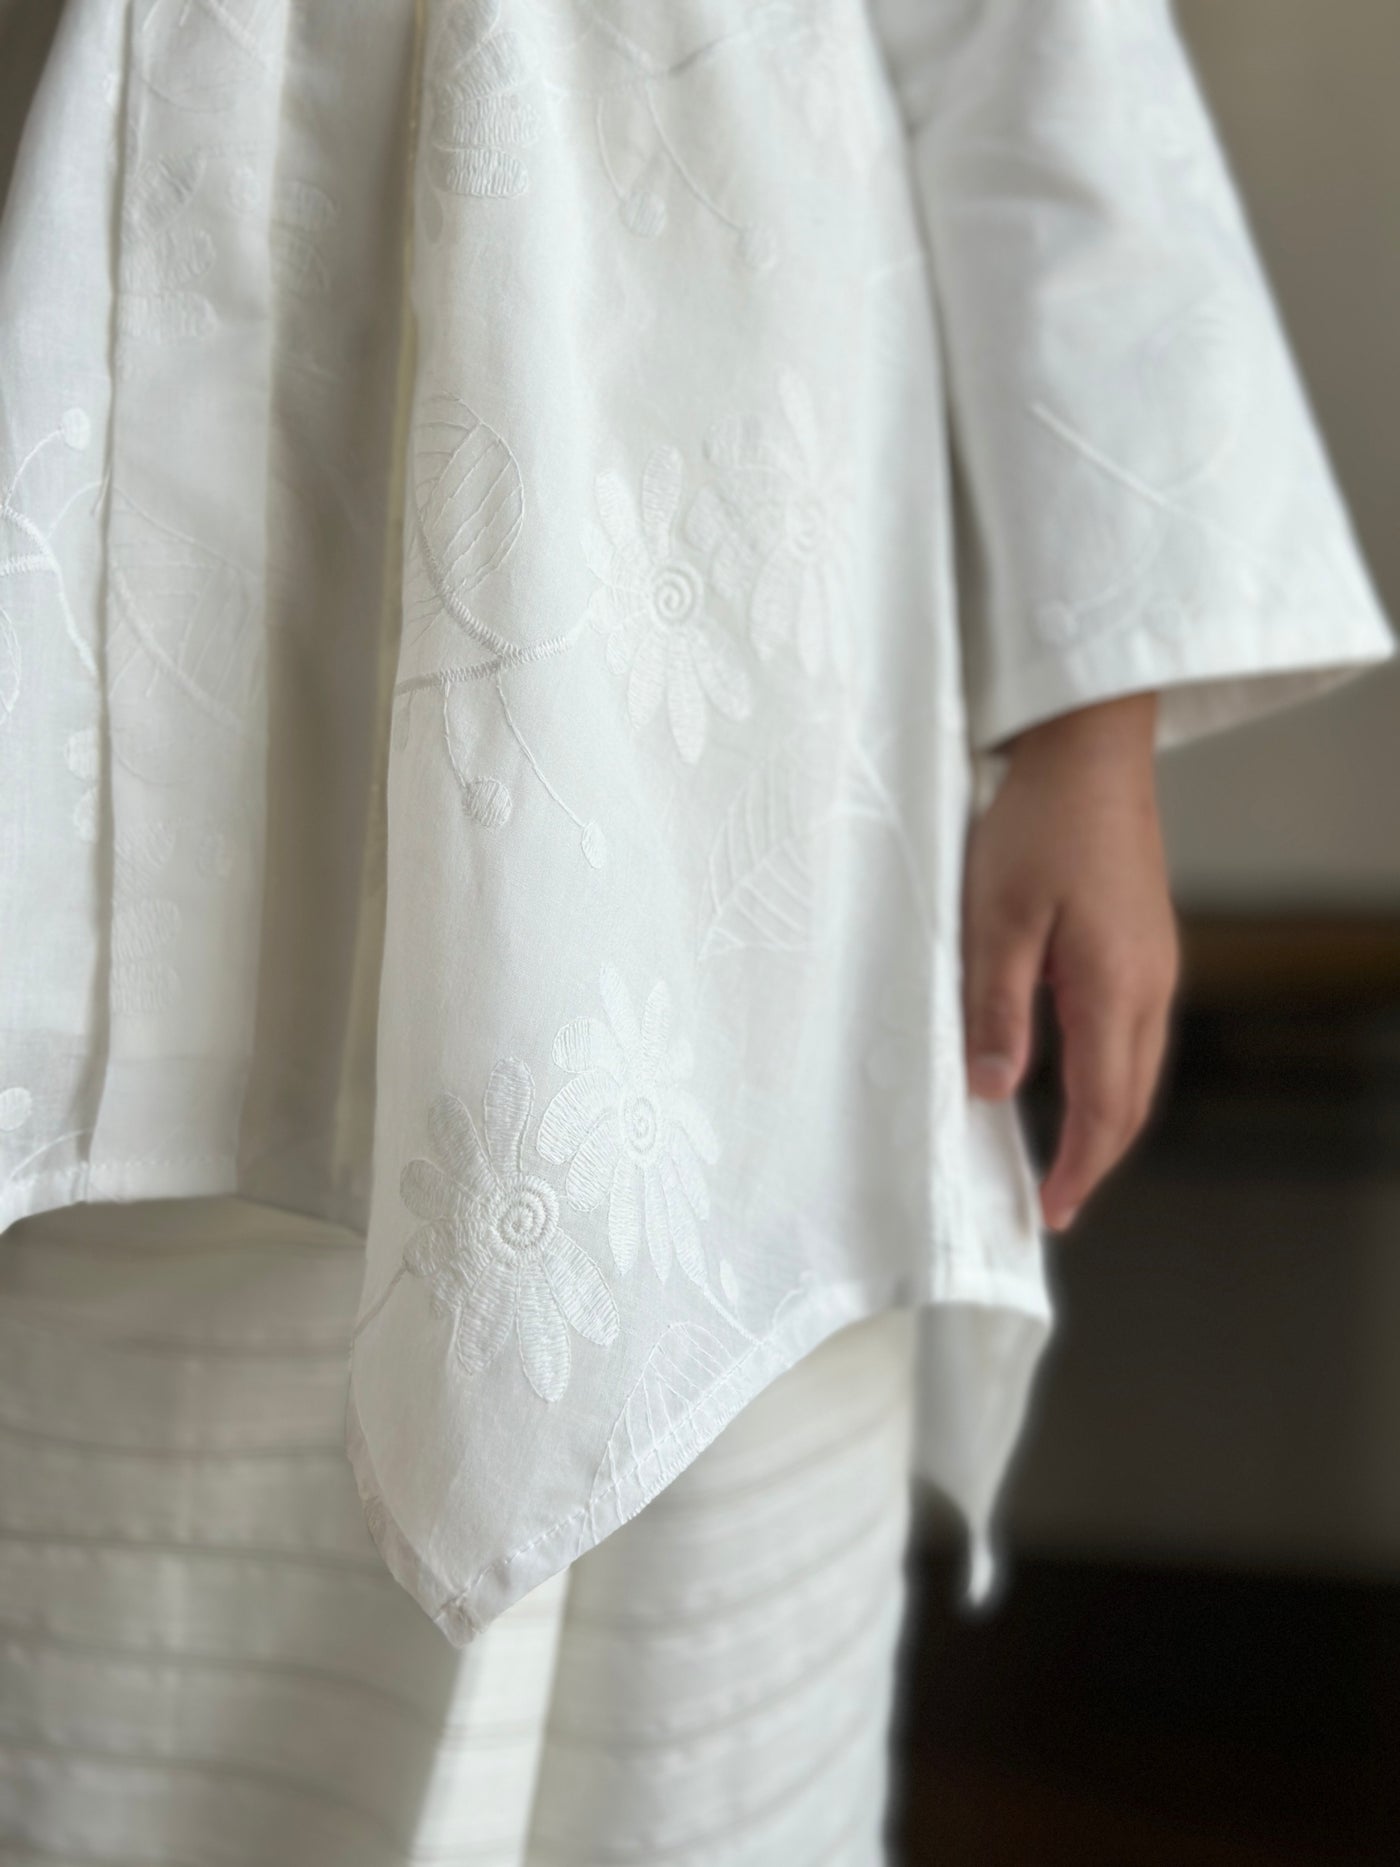 RATNA Kebaya Set in White Embroidery